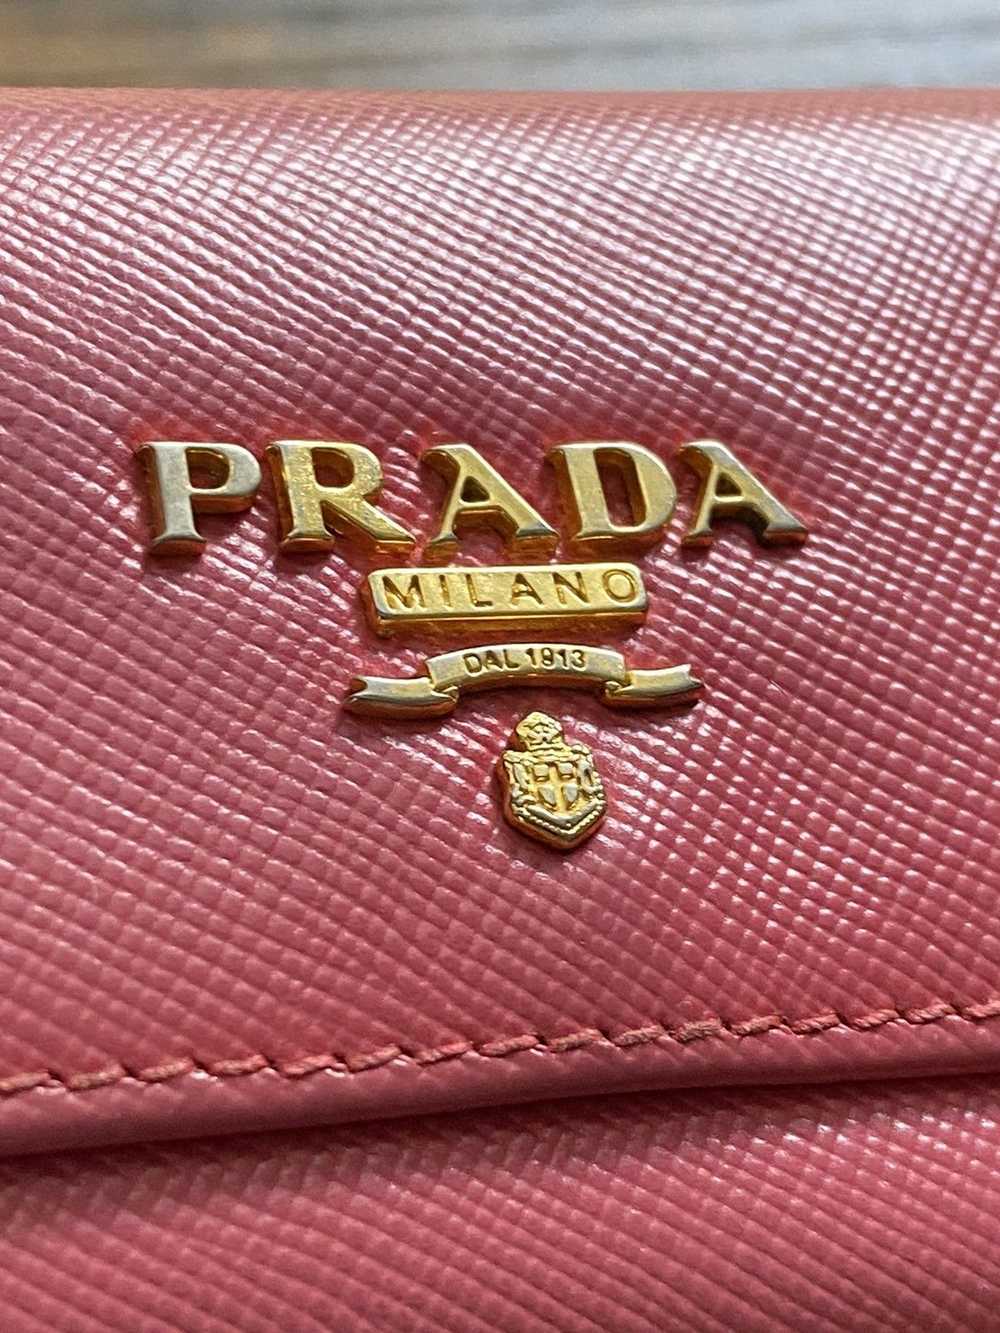 Prada Prada Saffiano metal leather key holder - image 2